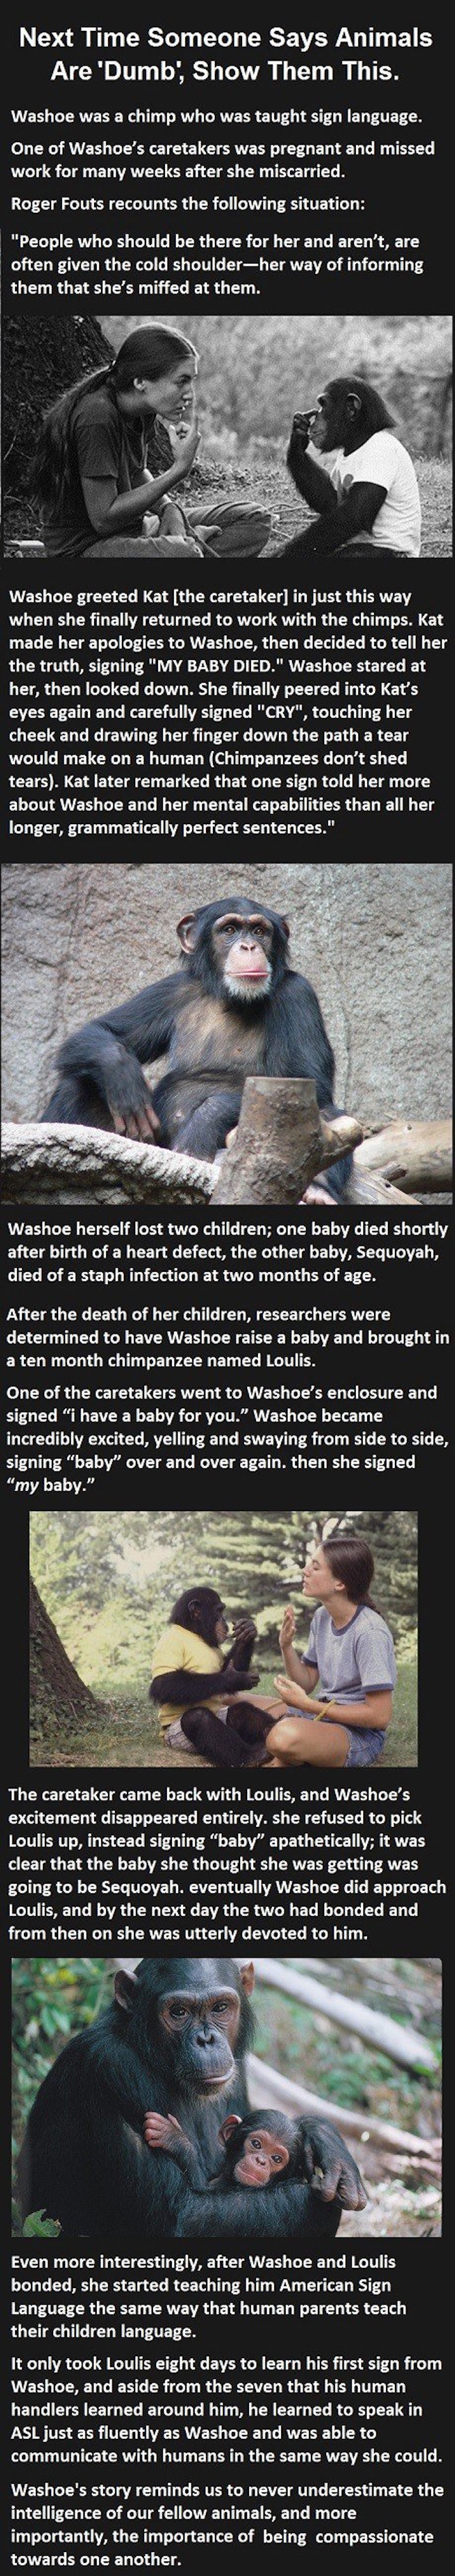 chimp-lost-baby